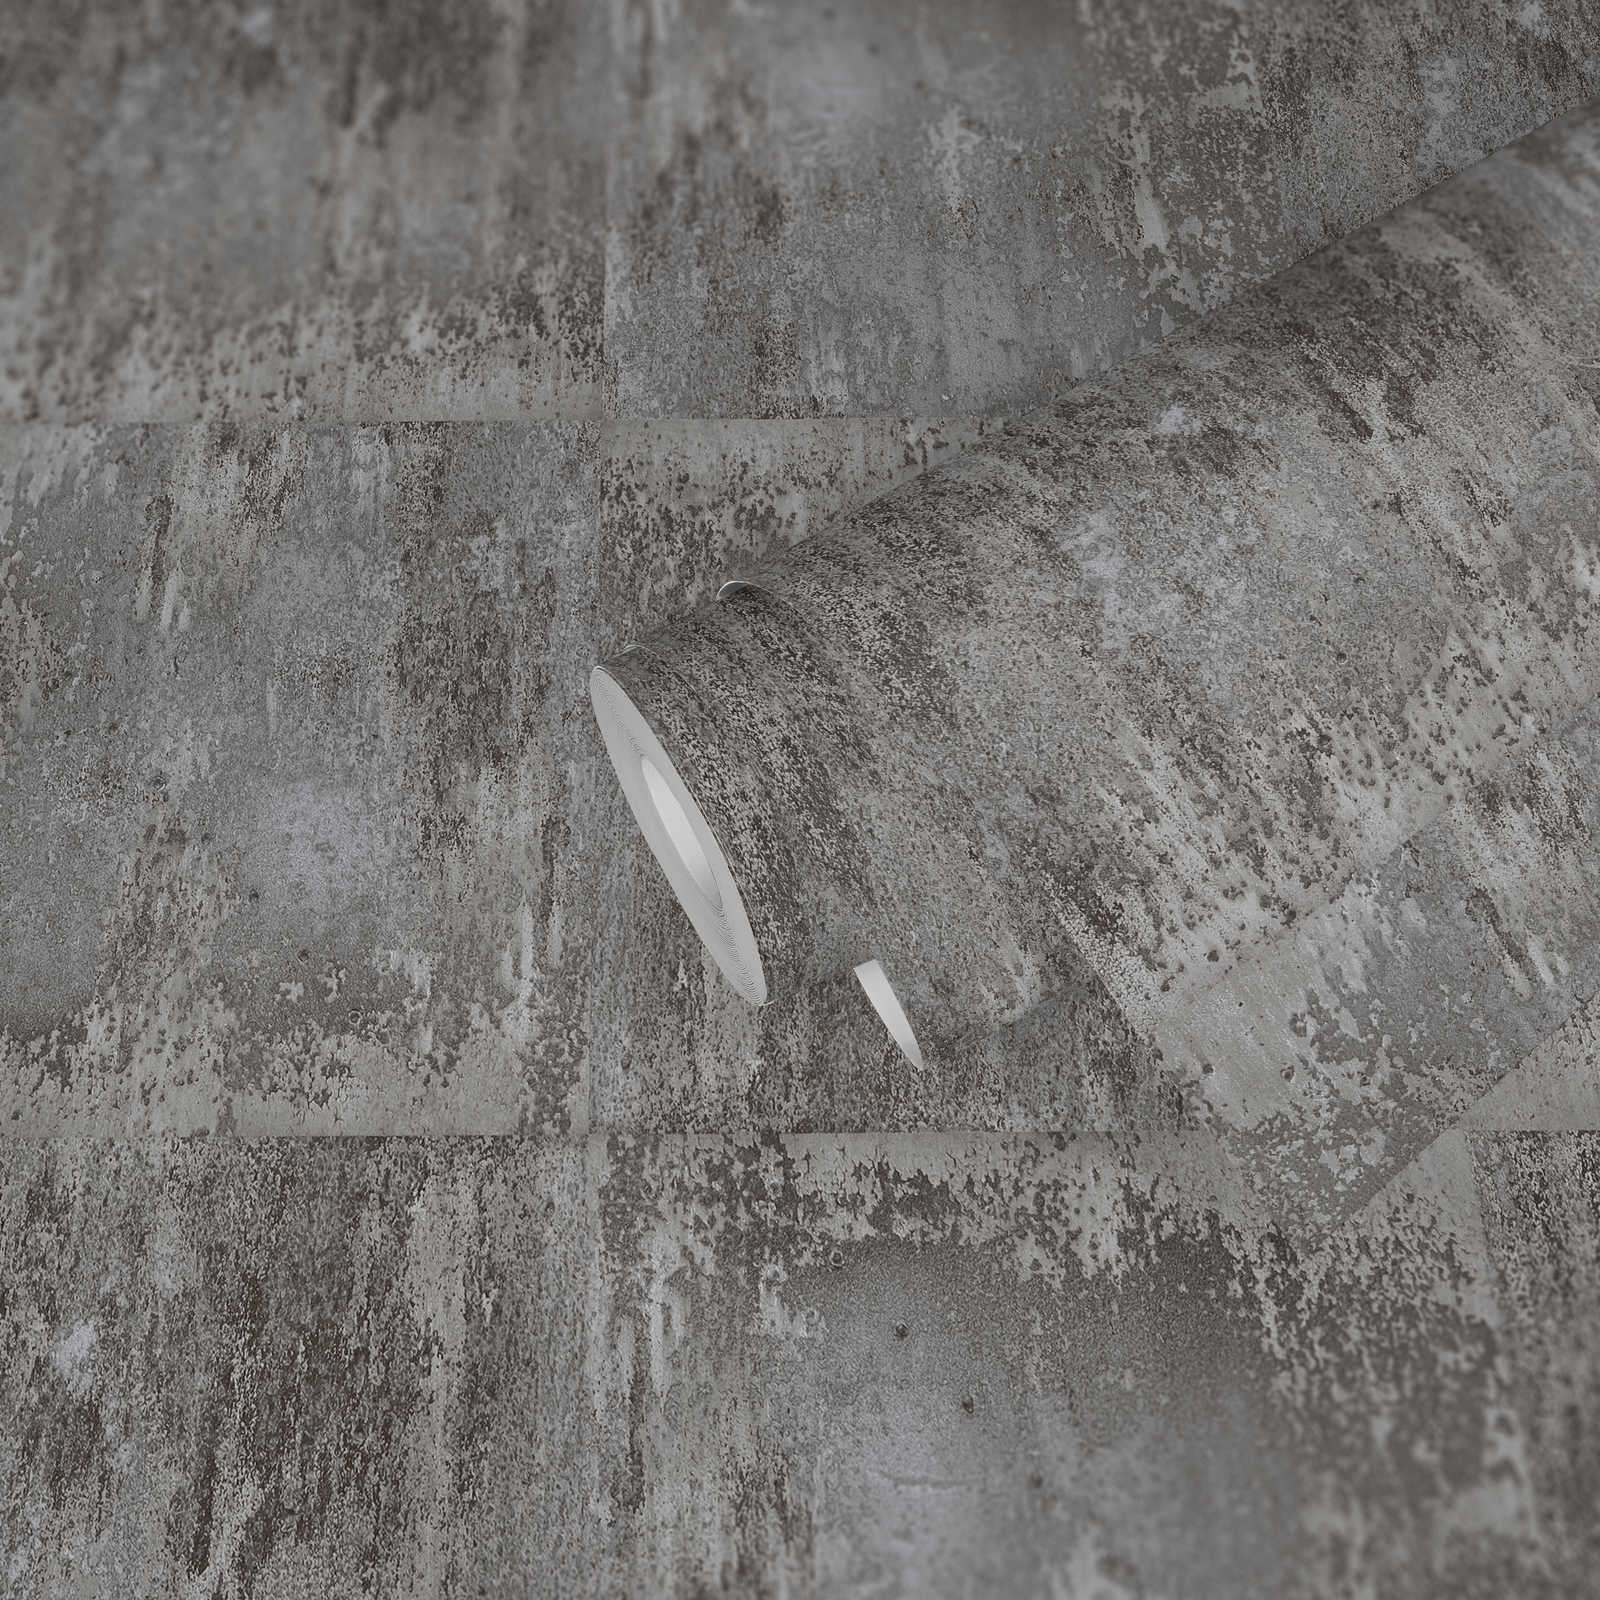             Selbstklebende Tapete | Rostoptik Design mit Metallic Effekt – Grau
        